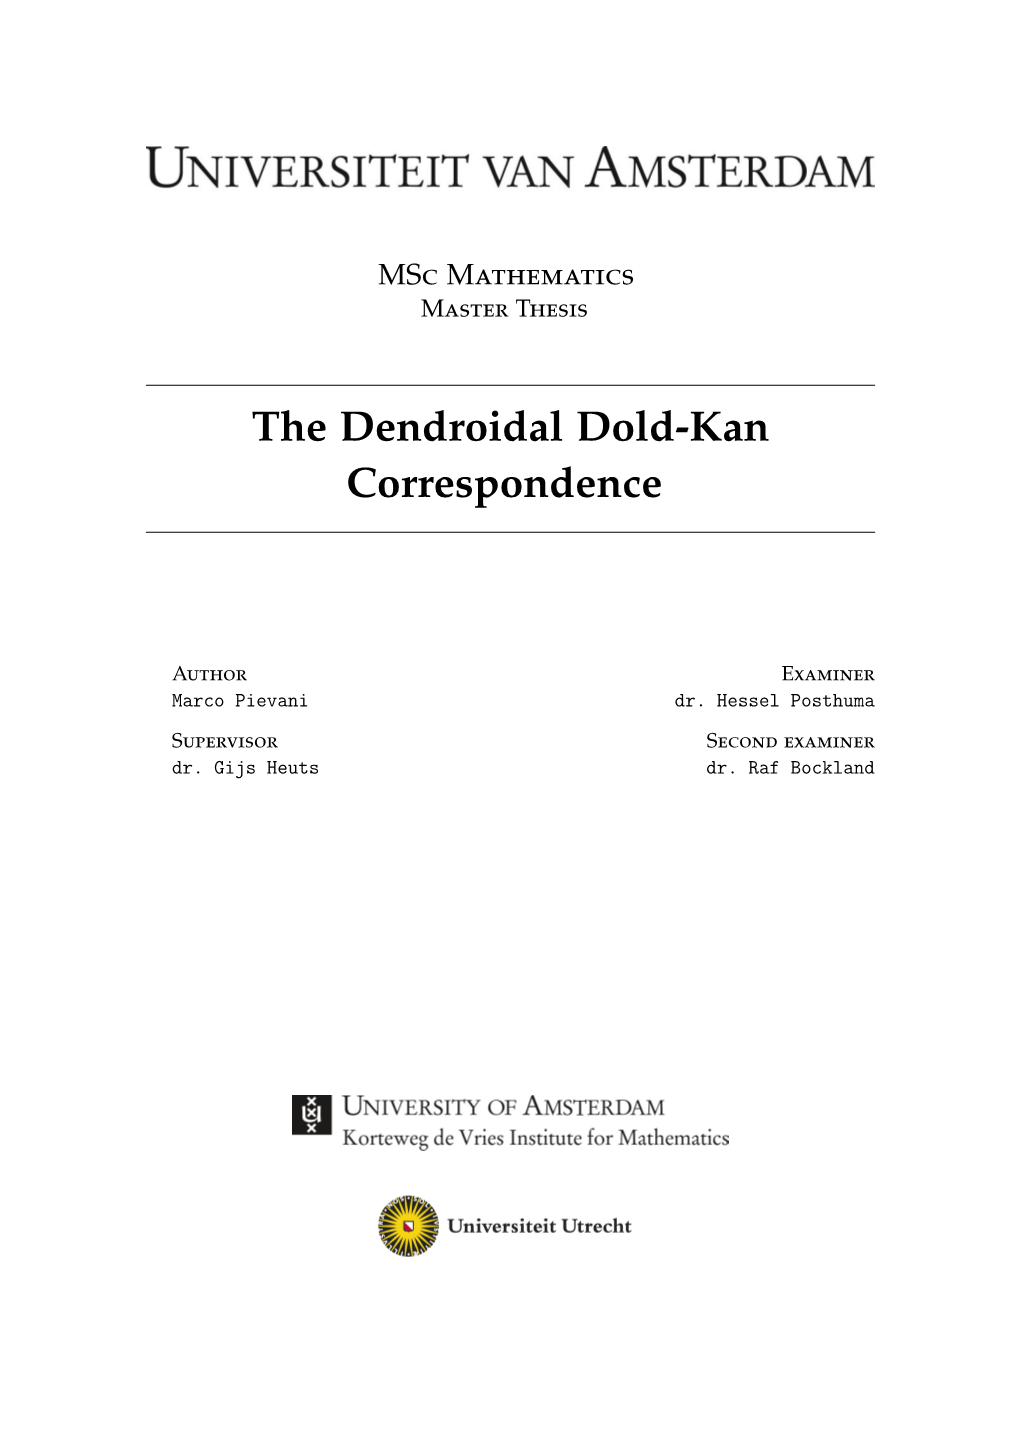 The Dendroidal Dold-Kan Correspondence